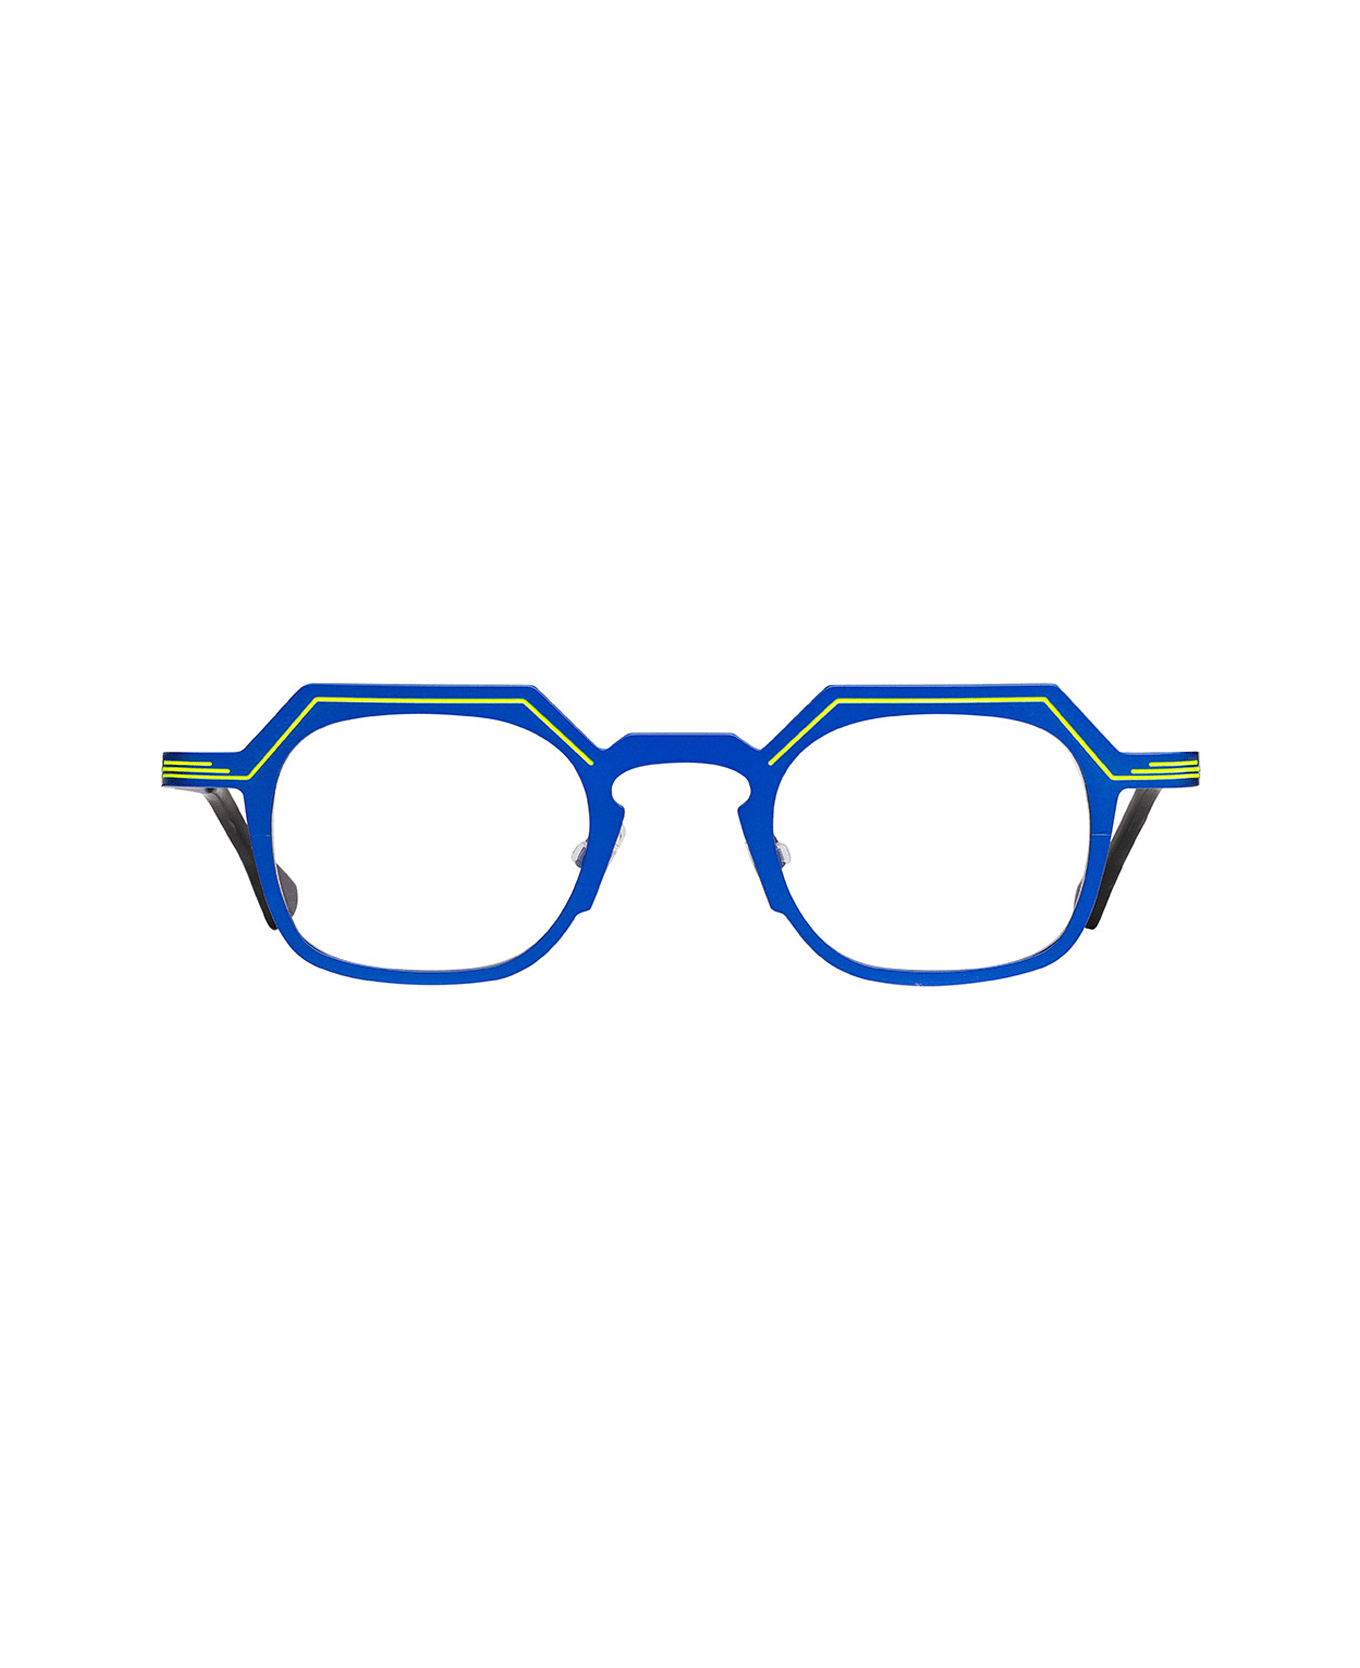 Matttew Delta Glasses - Blu